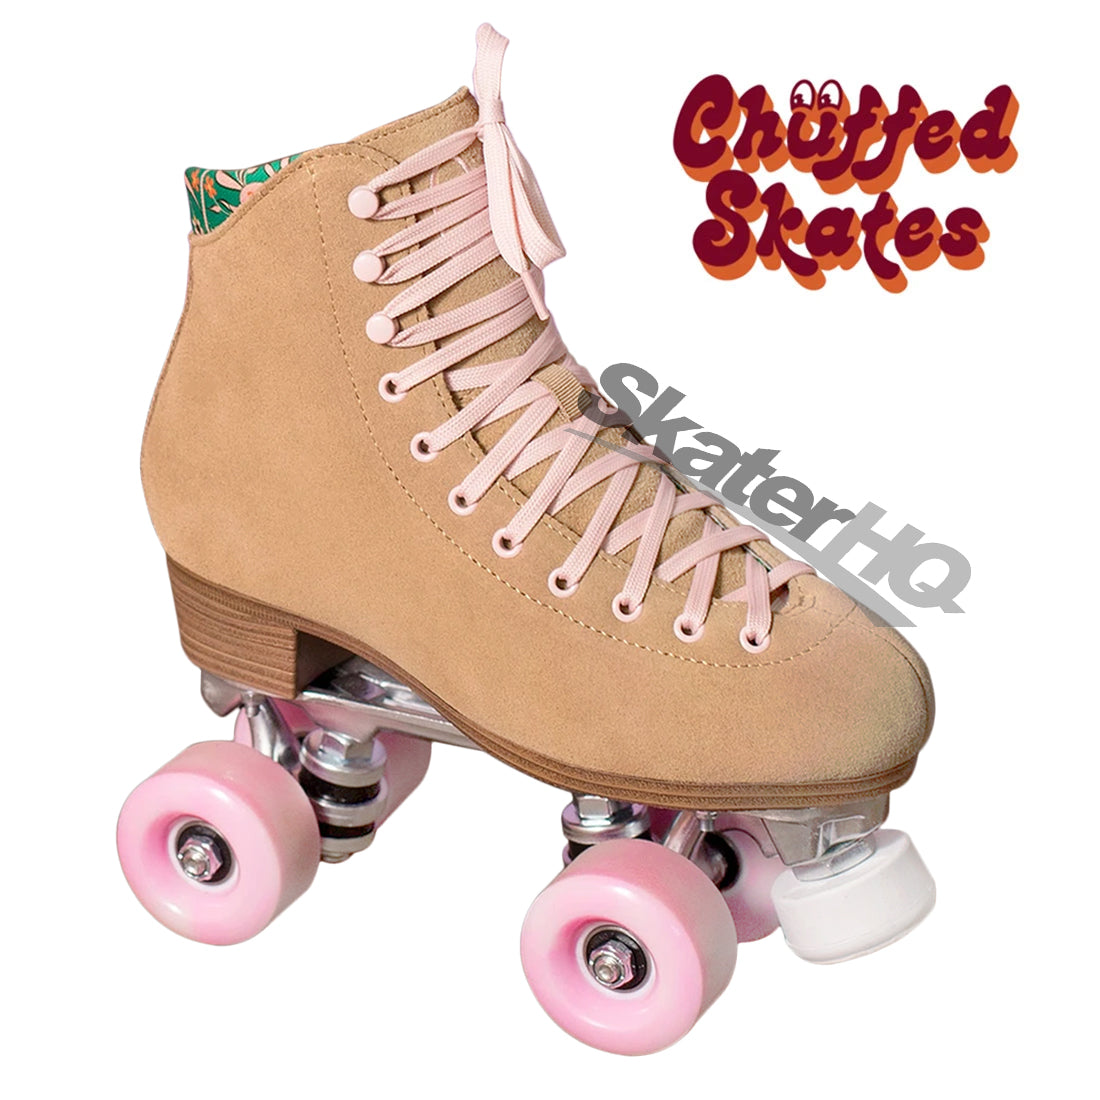 Chuffed Crew Iced Coffee 7US Roller Skates